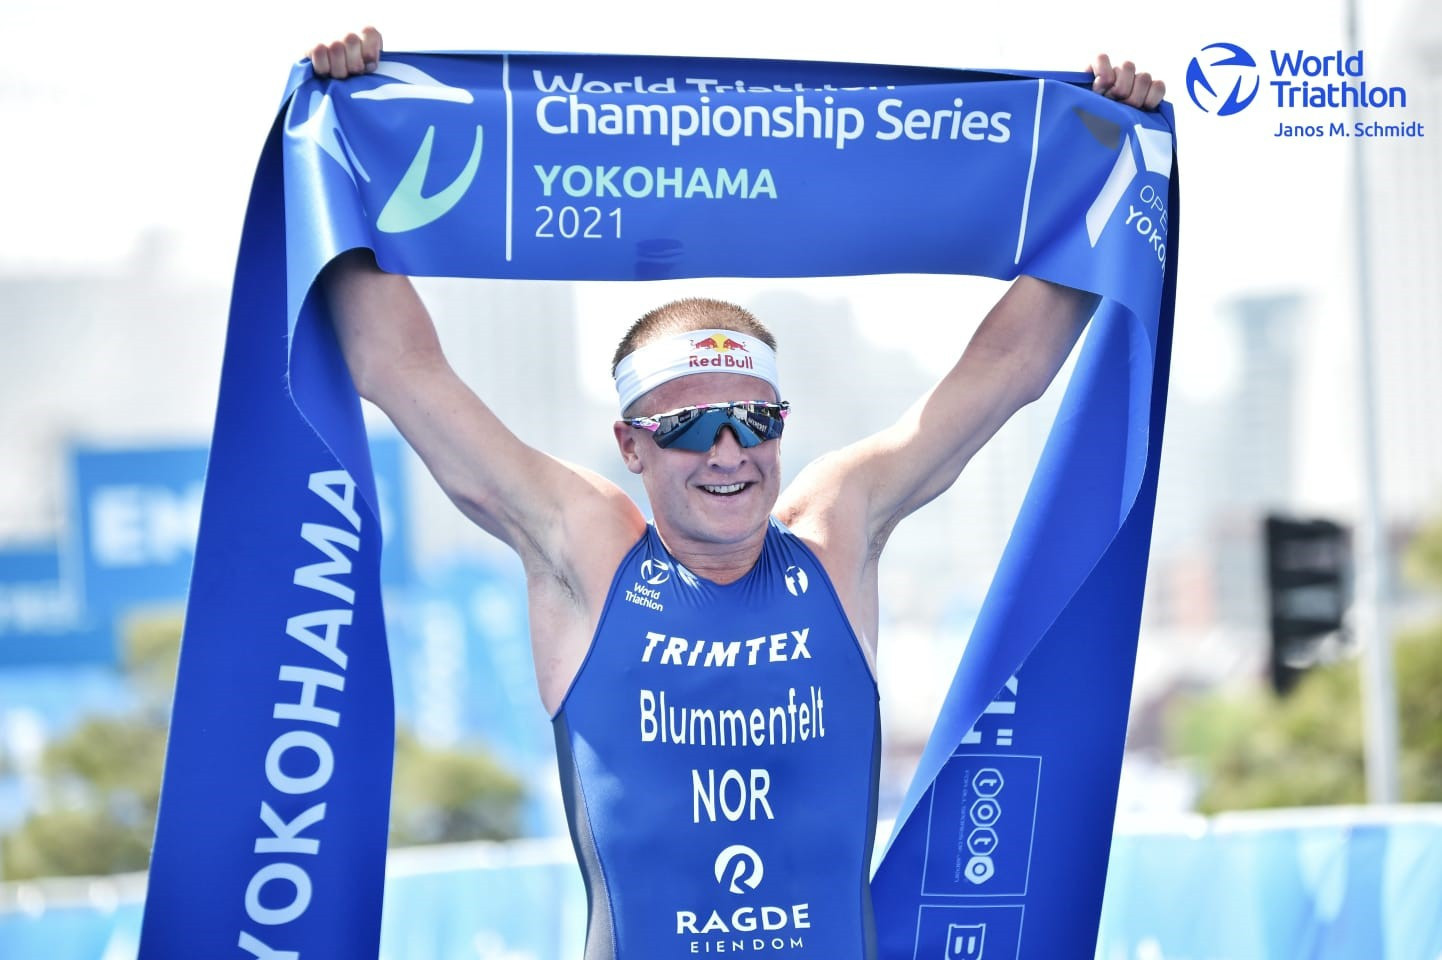 Blummenfelt and Knibb win World Triathlon Championship Series races in Yokohama